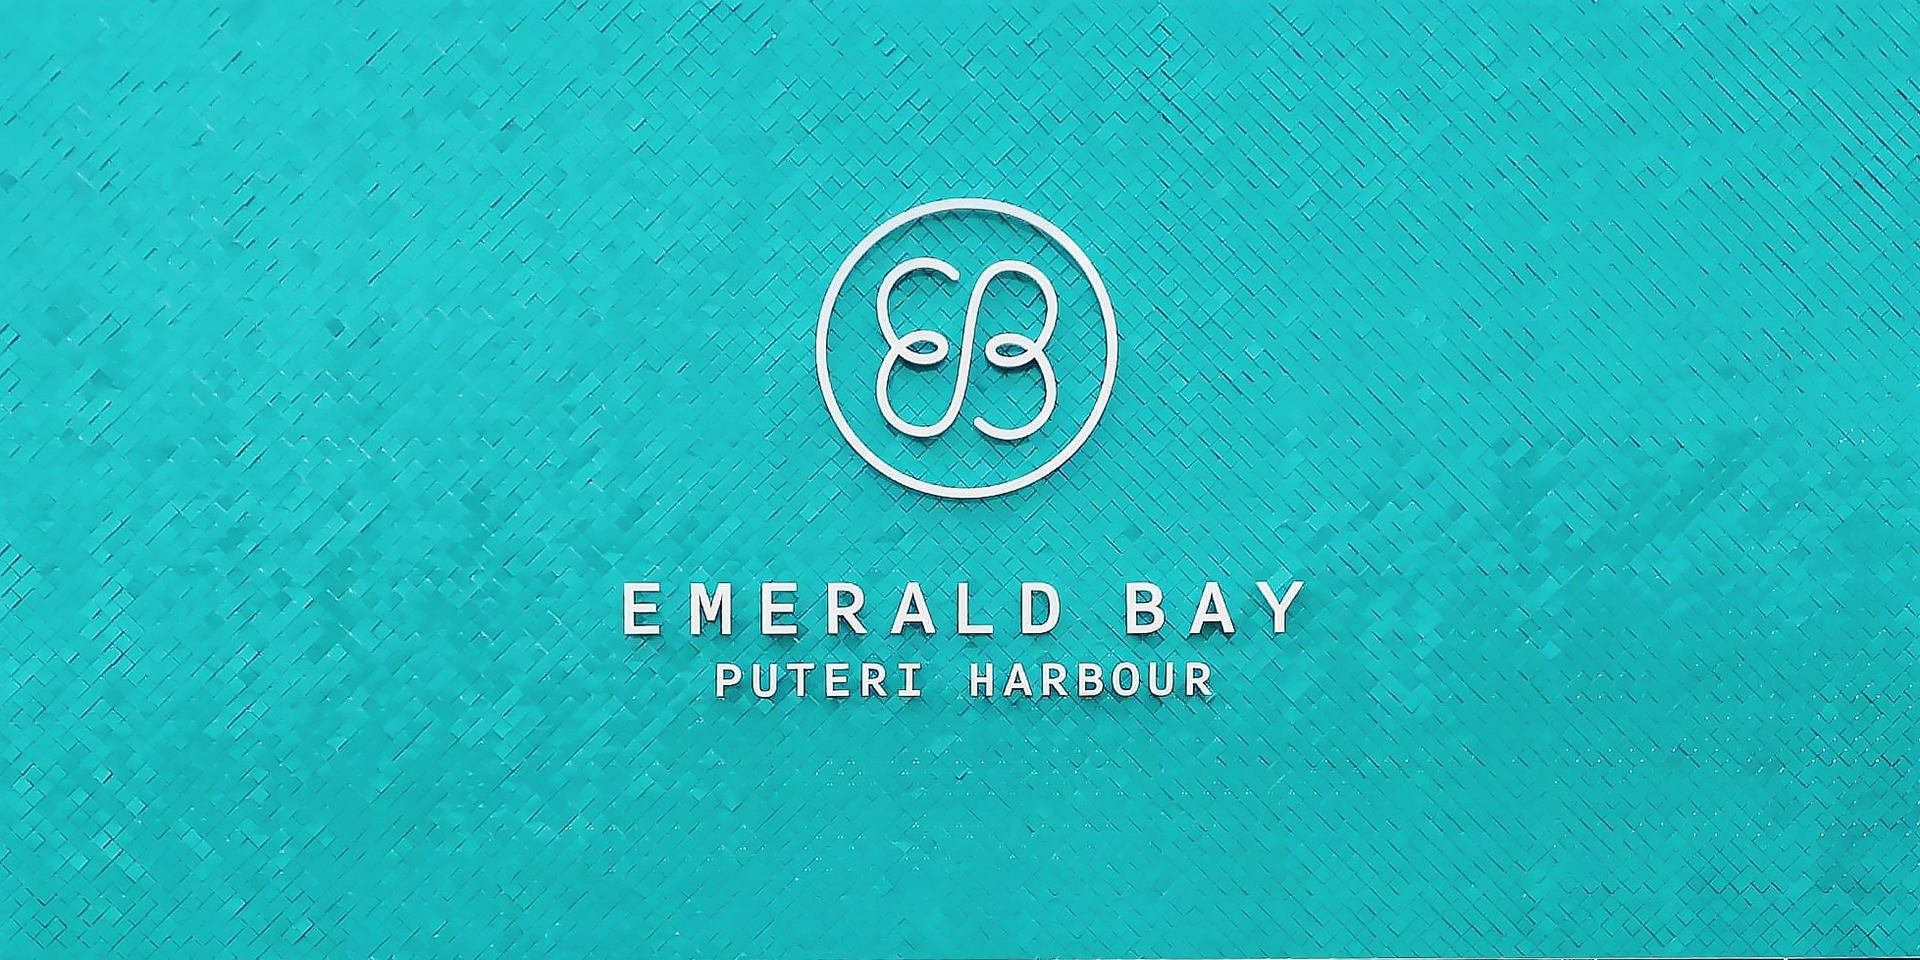 Emerald Bay Kinetic Billboard